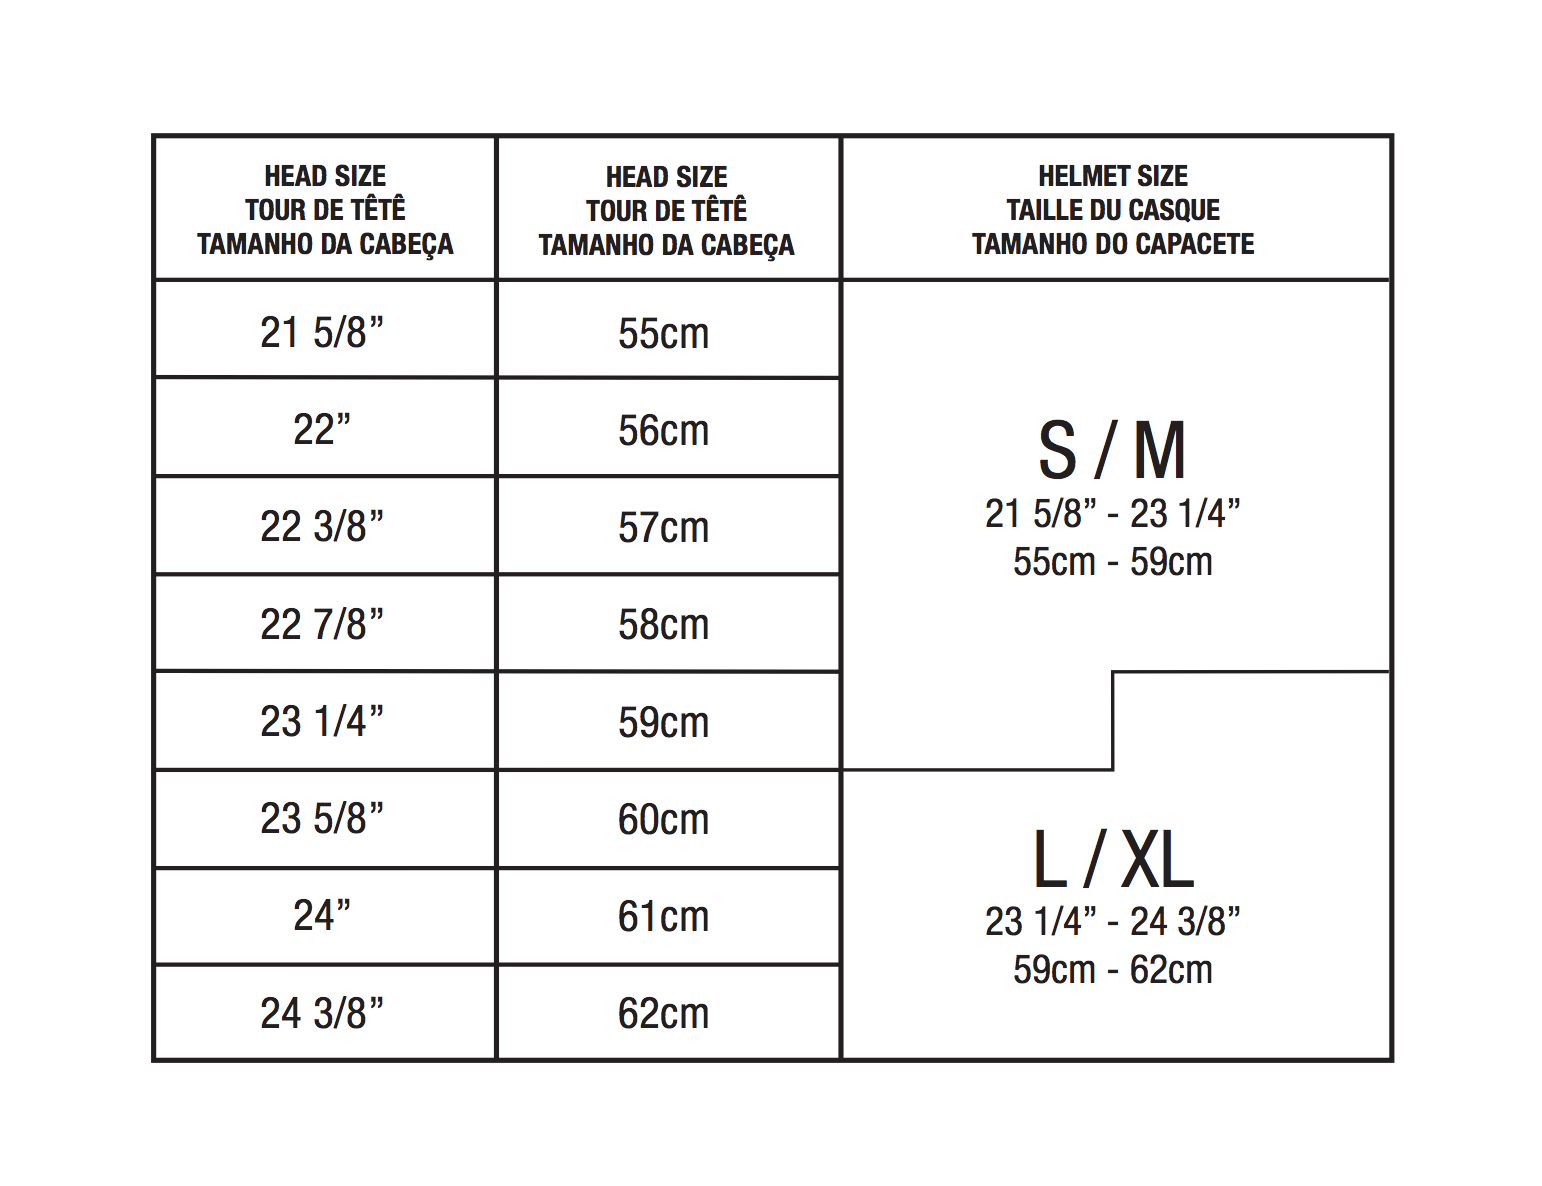 Xenith Helmet Size Chart